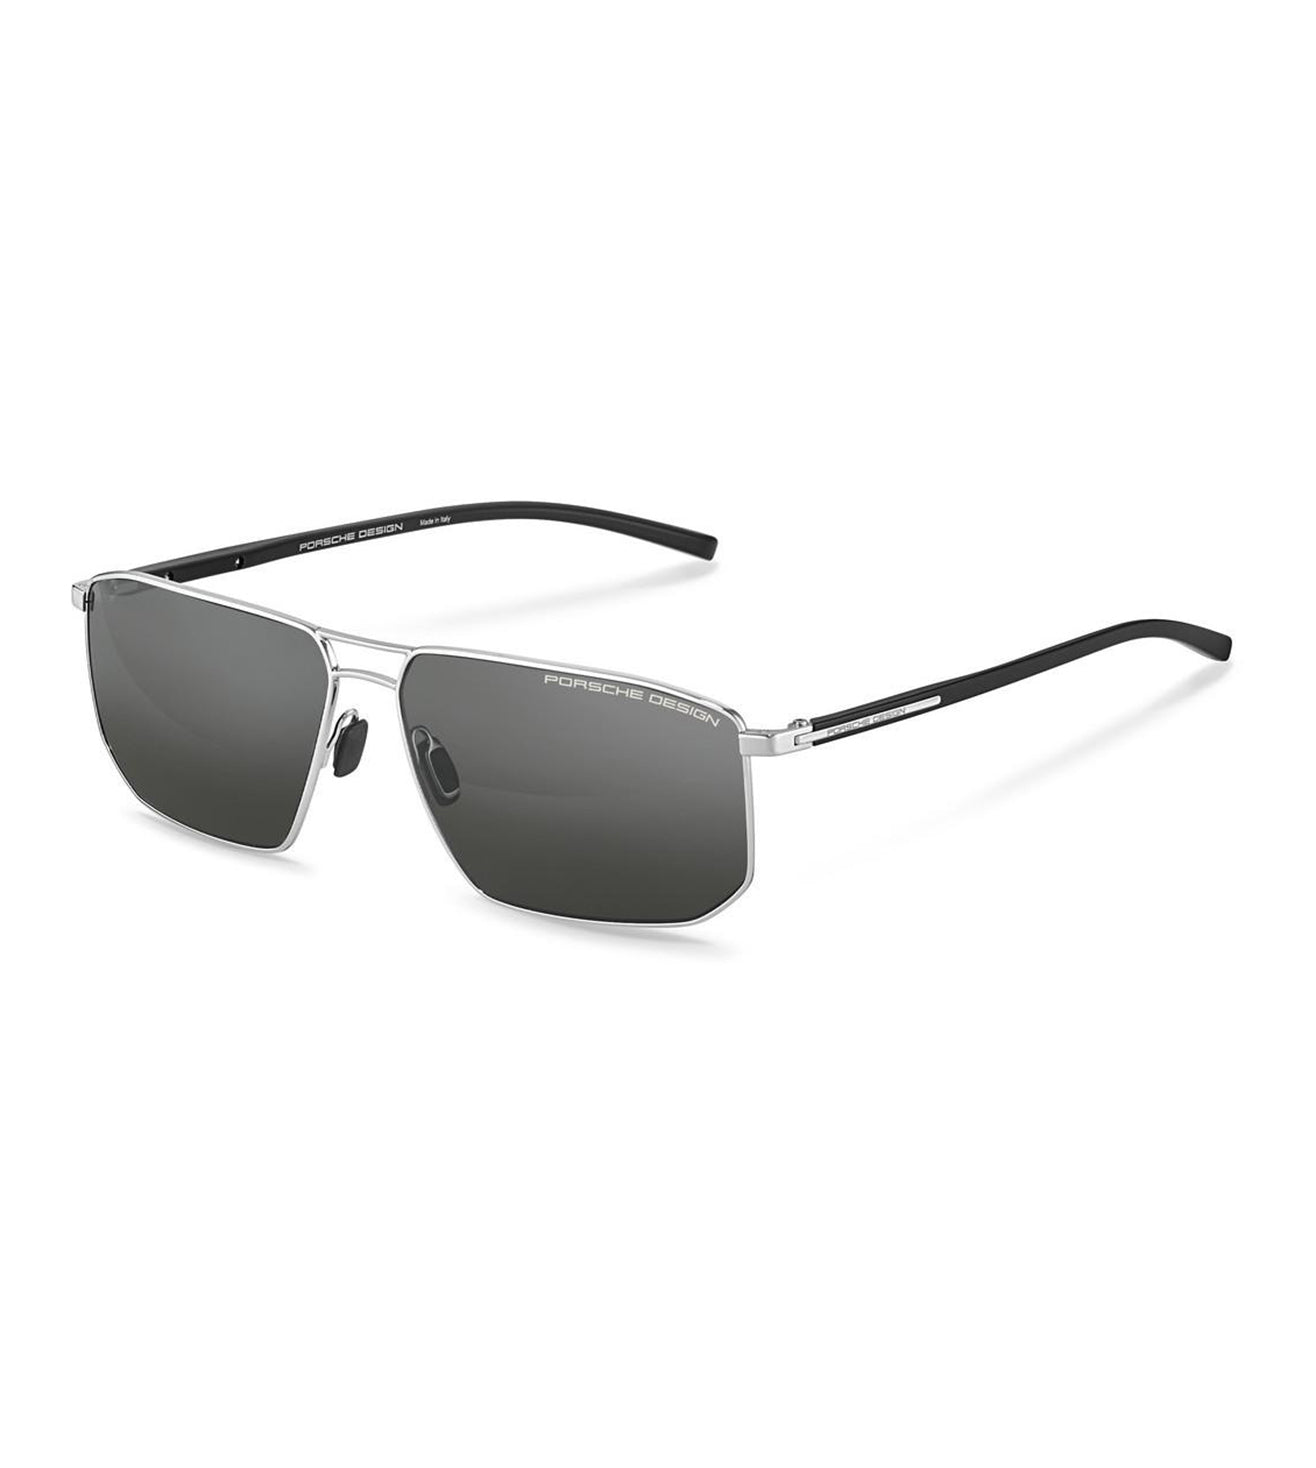 Porsche Design Men's Dark Grey Polarized Aviator Sunglasses